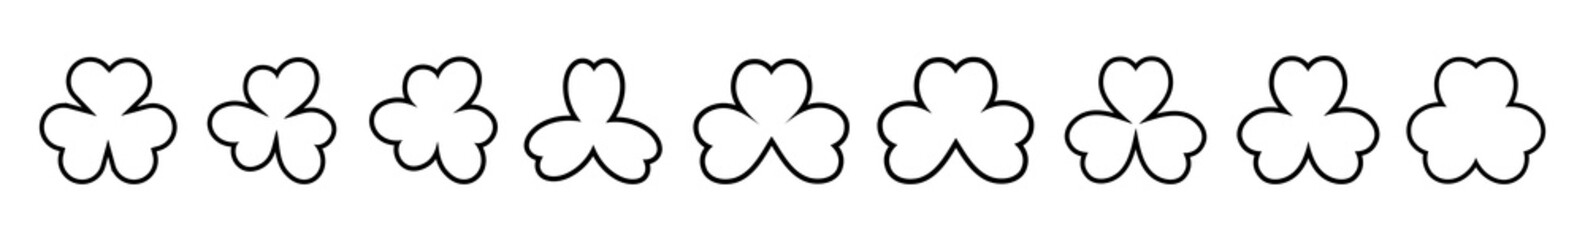 Shamrock Icon Black | Shamrocks | Trefoil | Clover Leaf | Irish Symbol | St. Patrick's Day Logo | Luck Sign | Isolated | Variations